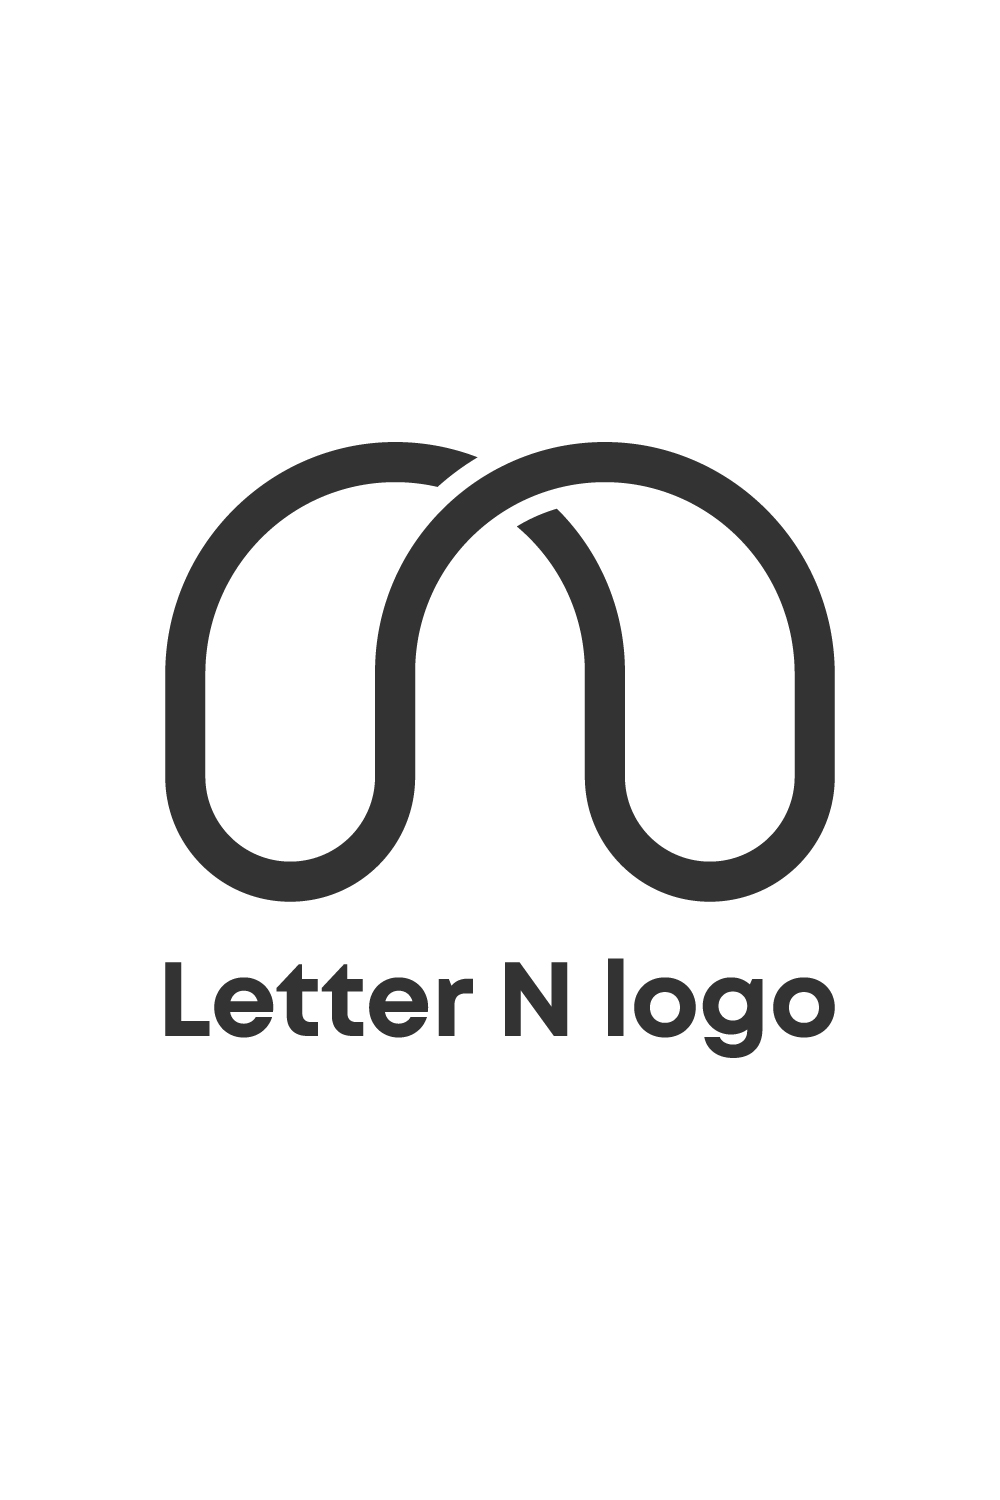 Letter N logo design pinterest preview image.